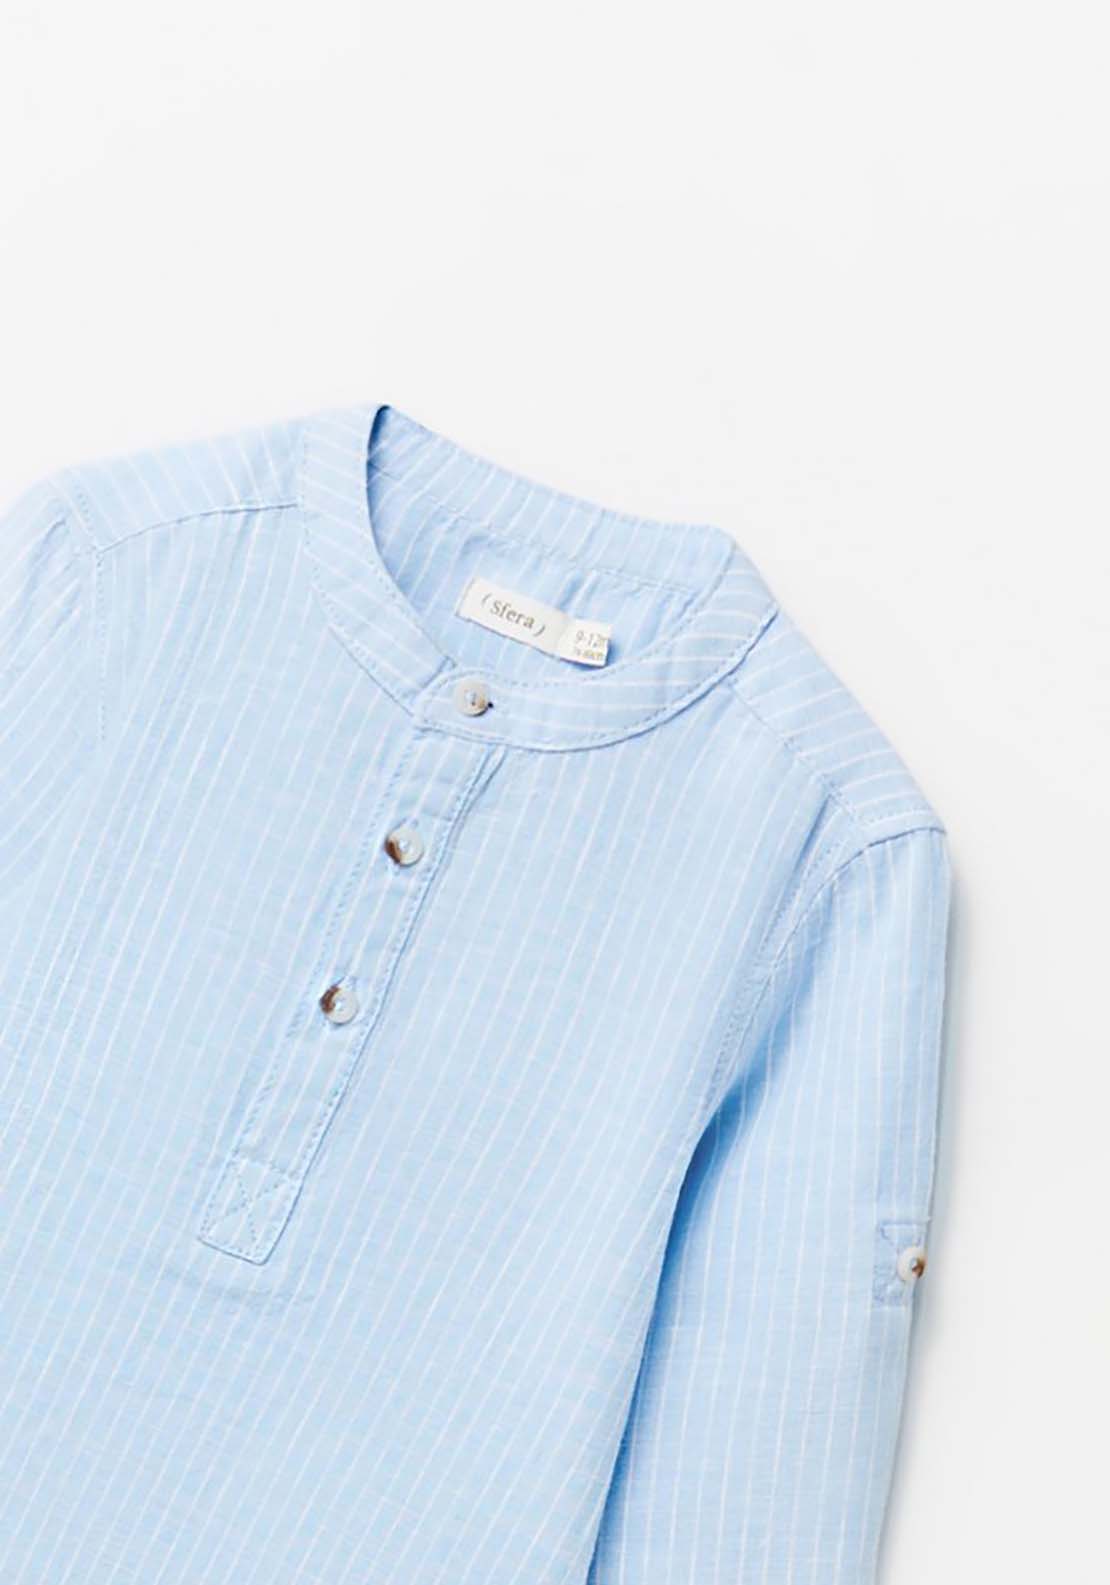 Sfera Striped Linen Shirt - Blue 2 Shaws Department Stores